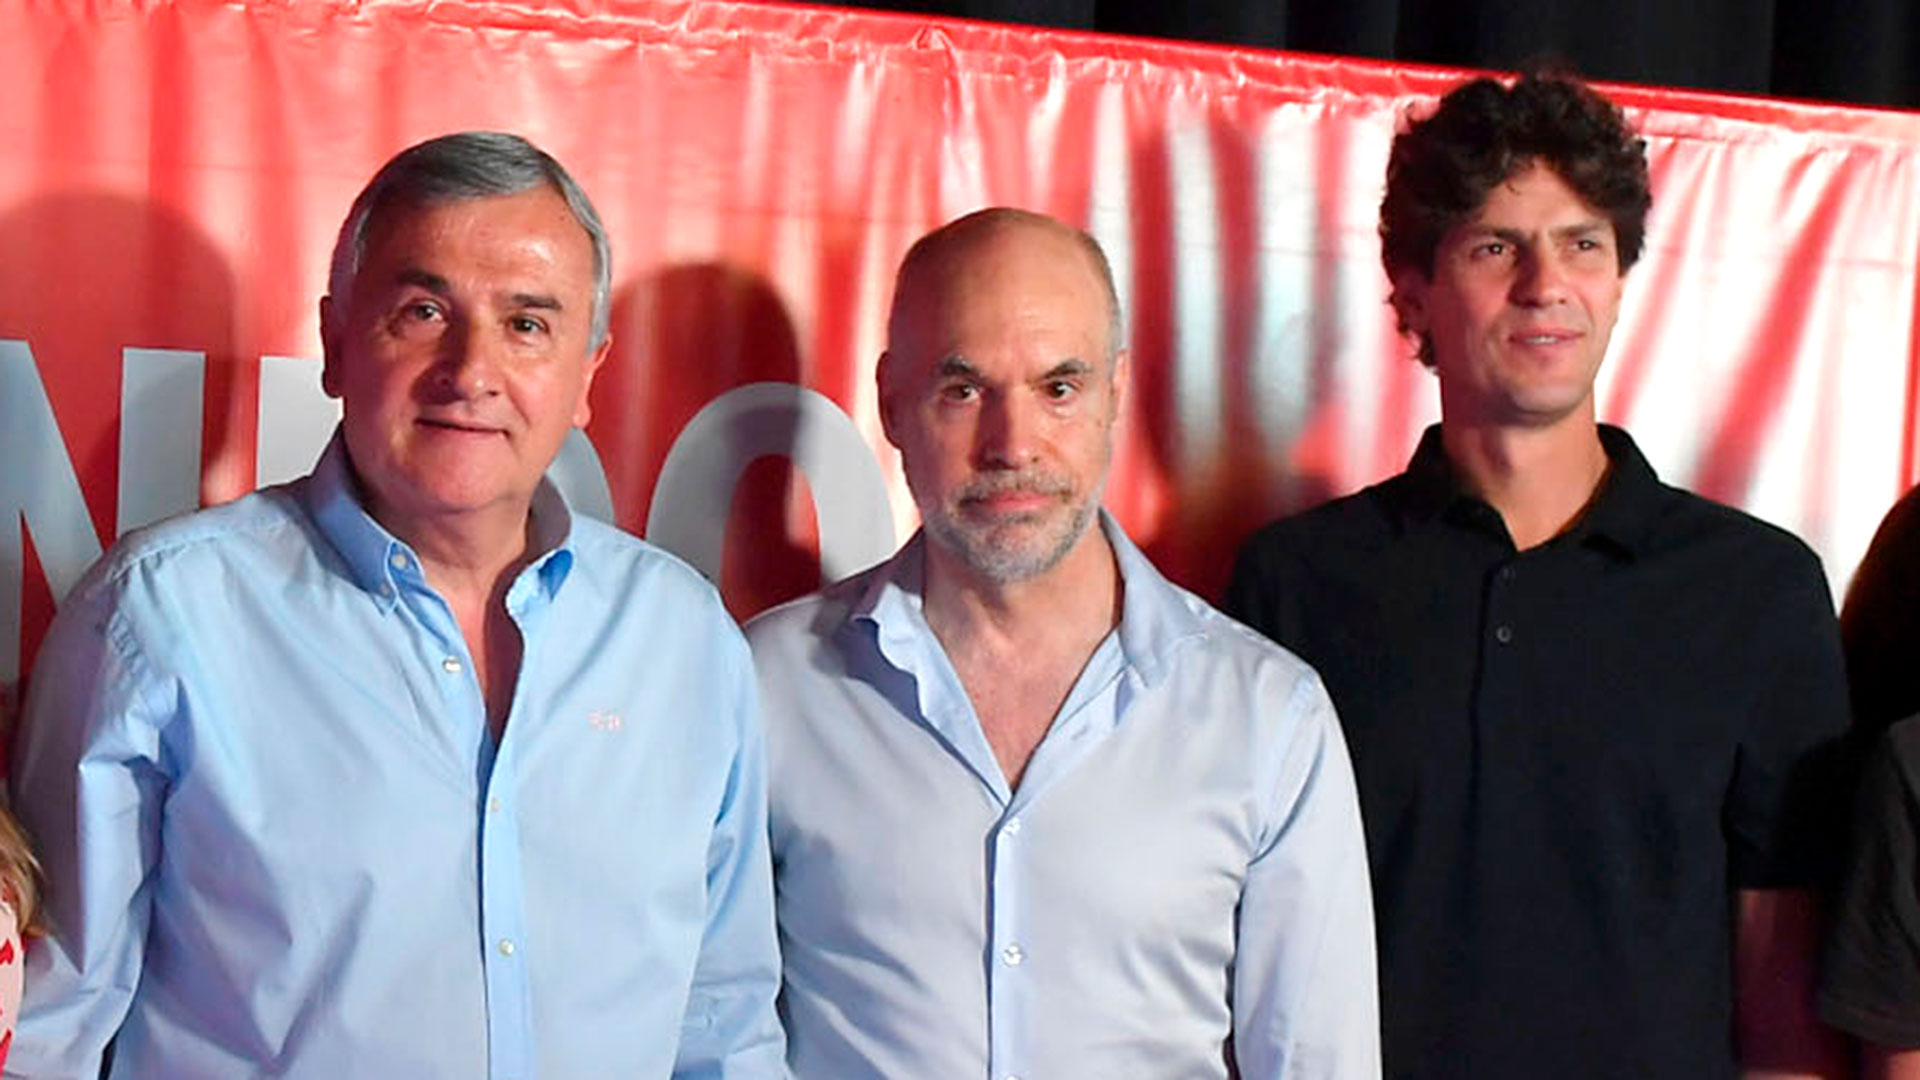 Gerardo Morales, Horacio Rodríguez Larreta and Martín Lousteau sealed their alliance at the Costa Salguero event